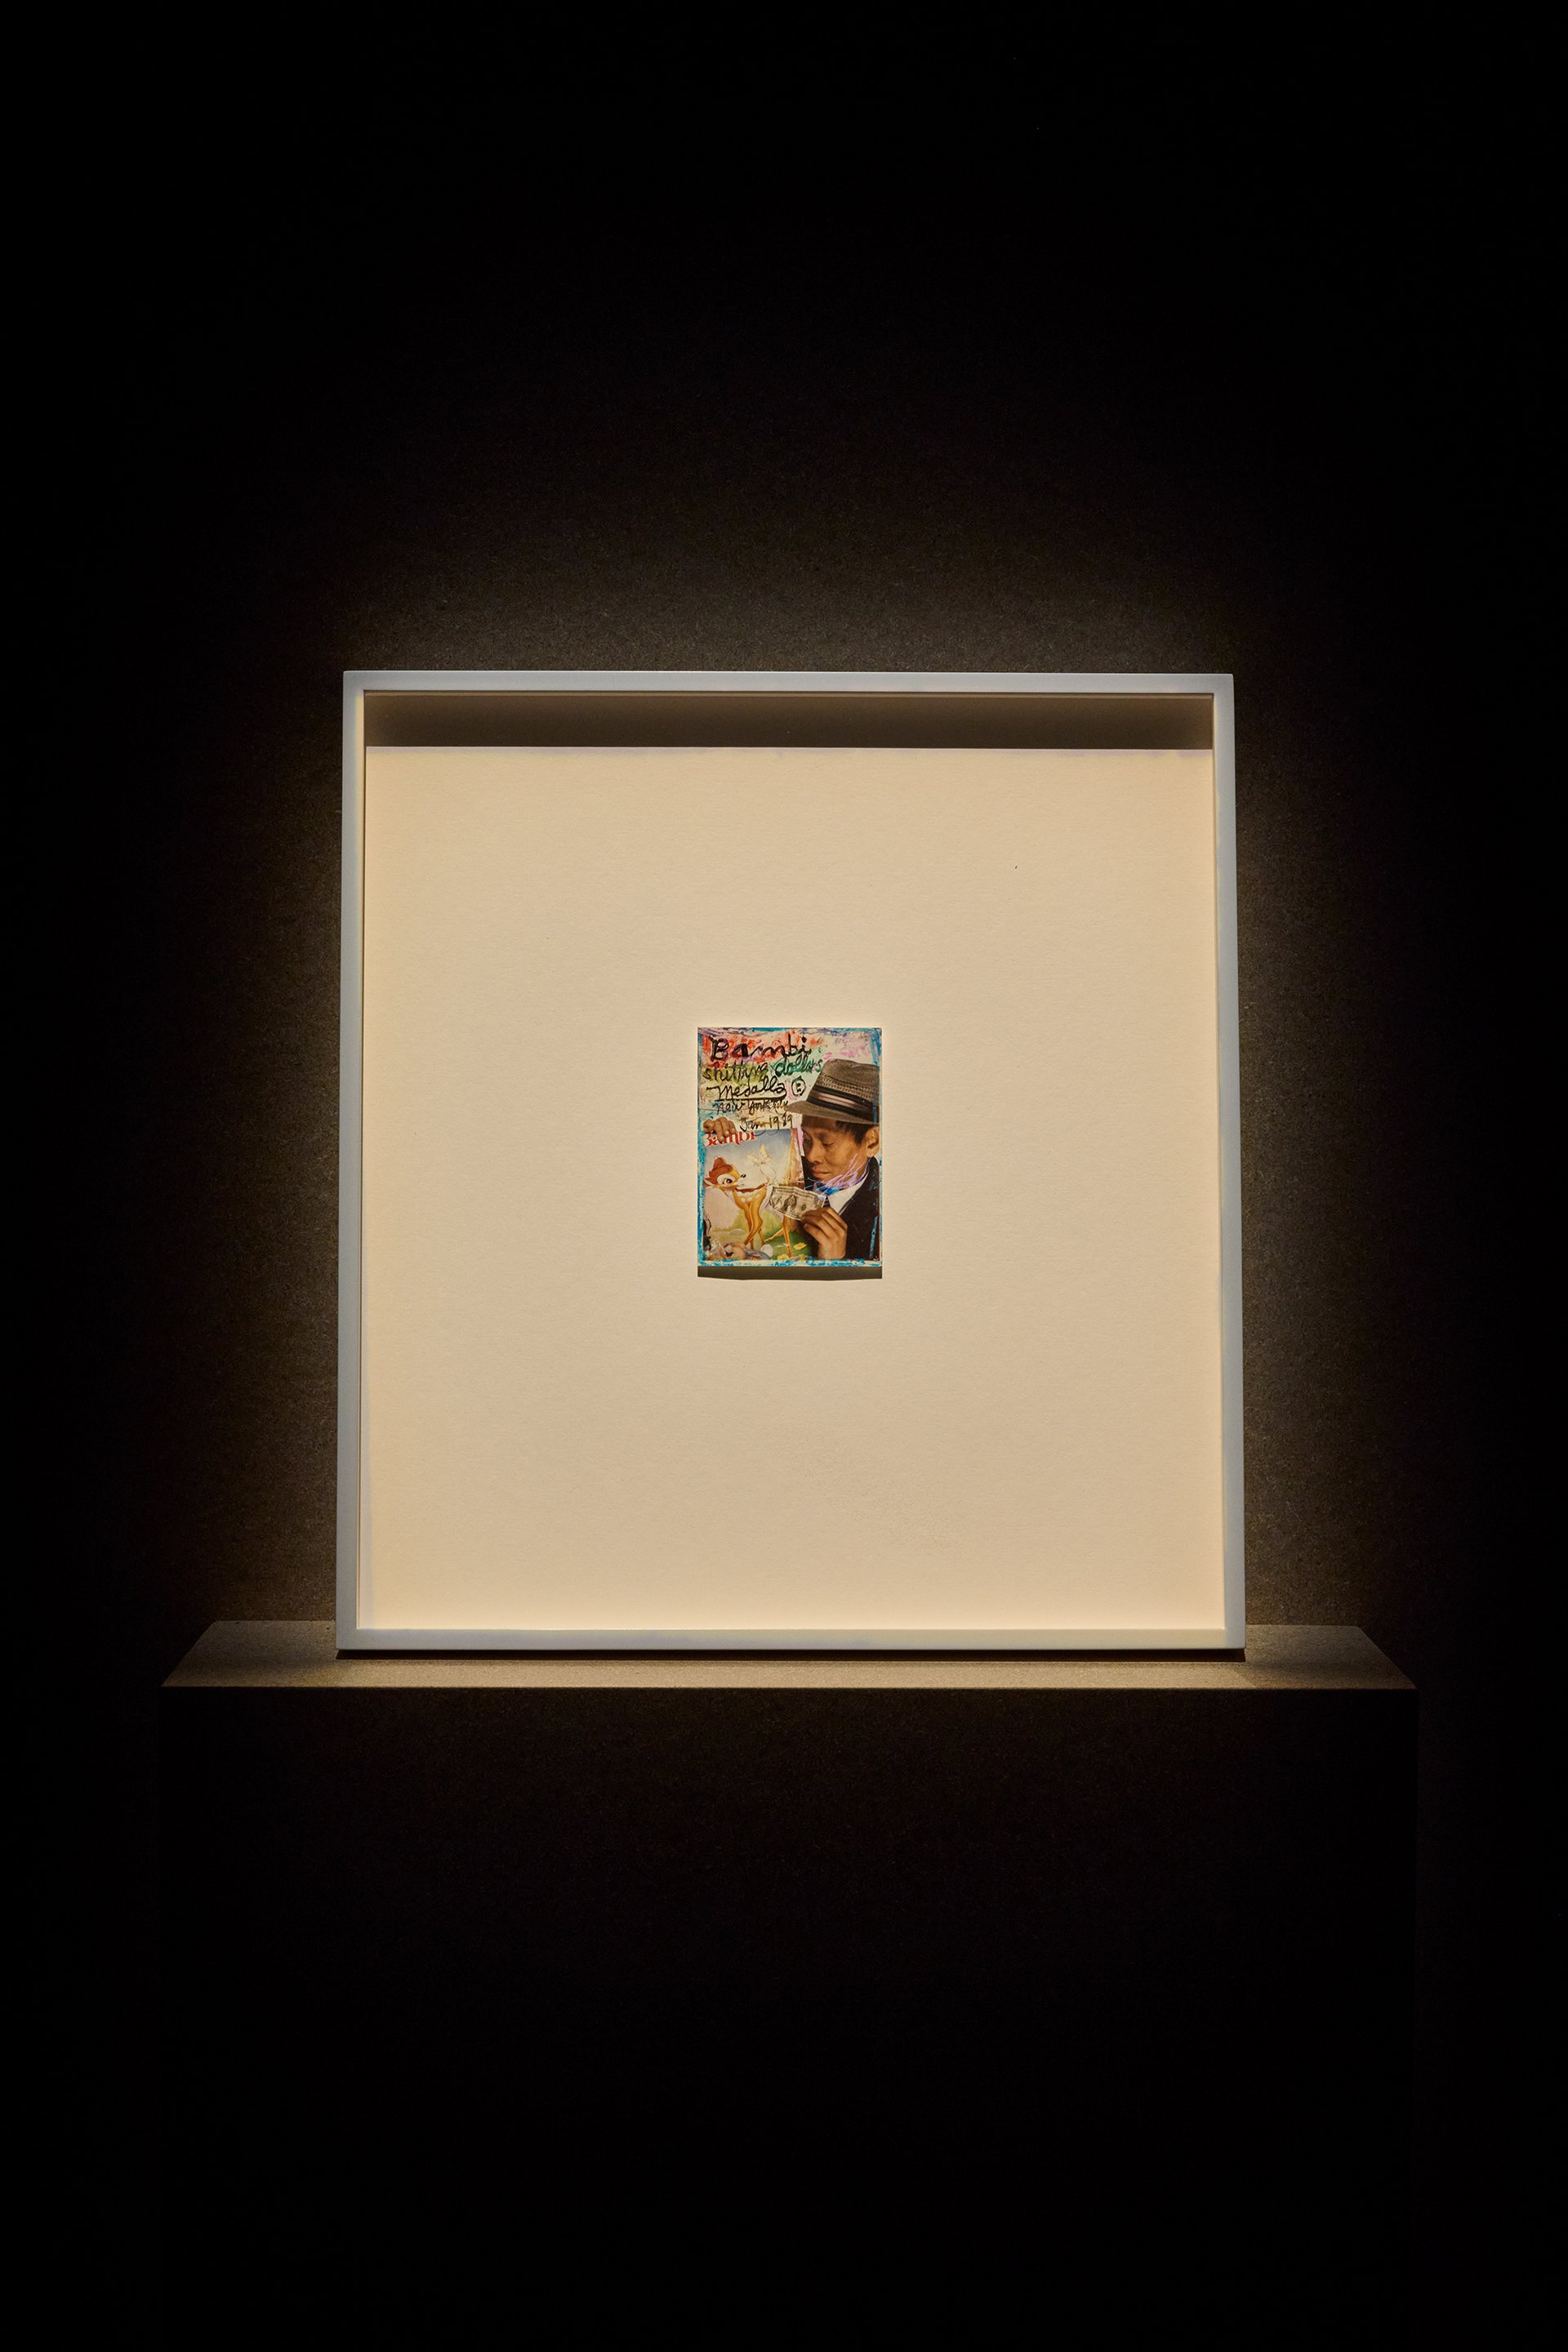 David Medalla, ‘Bambi Shitting Dollars’, 1989, collage on paper, 11,5 x 9 cm, Bonner Kunstverein, 2021. 